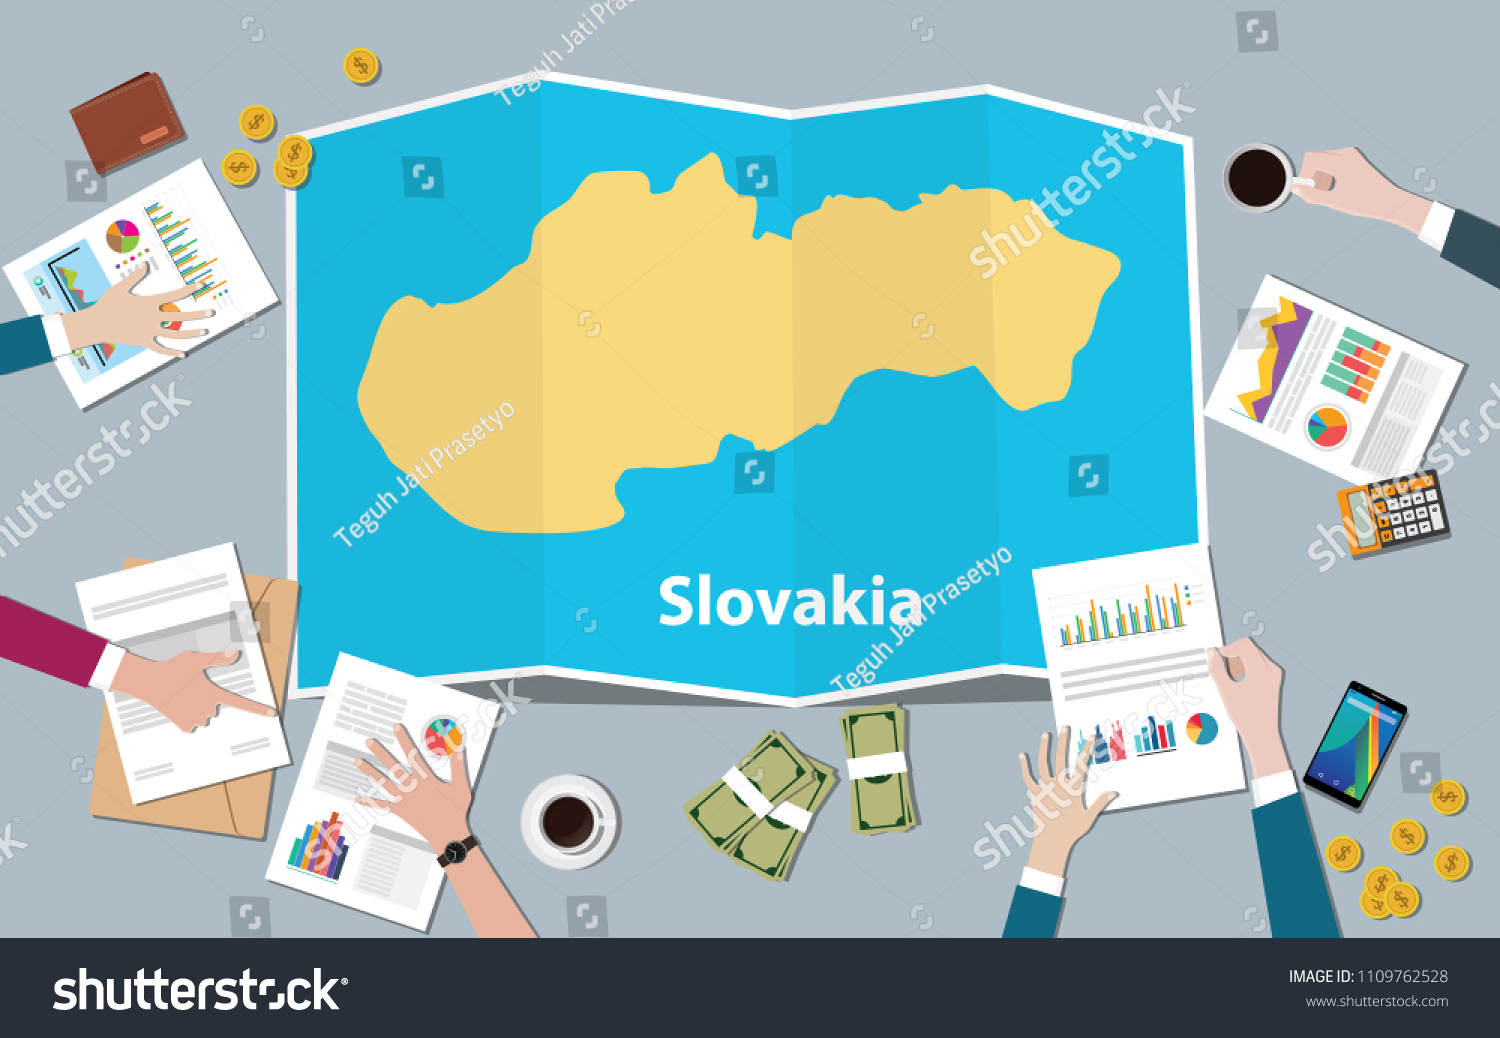 slovakia economy country growth nation team Royalty Free Stock Vector